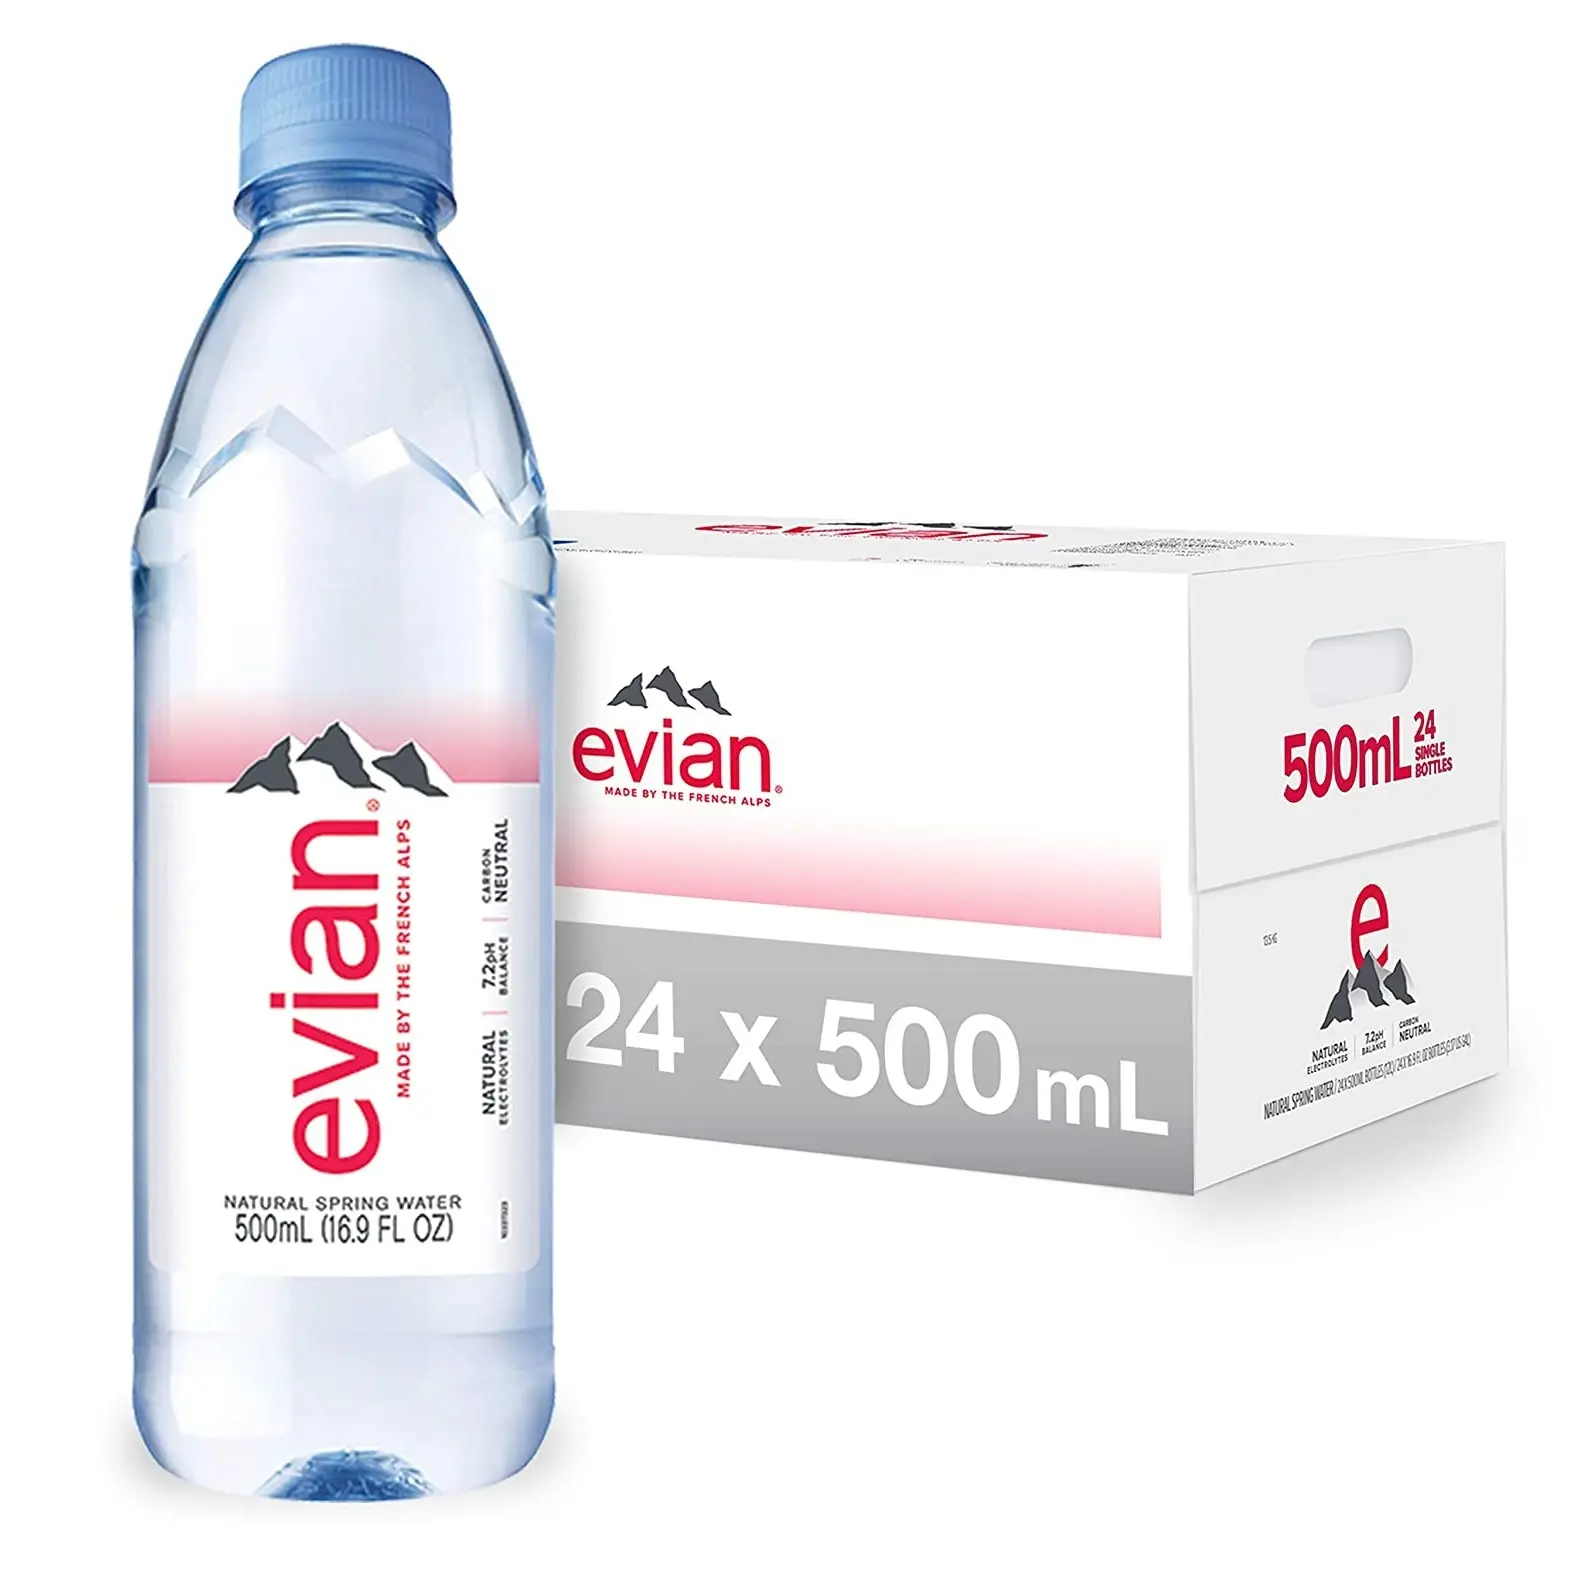 Premium kalite Evian bahar maden suyu